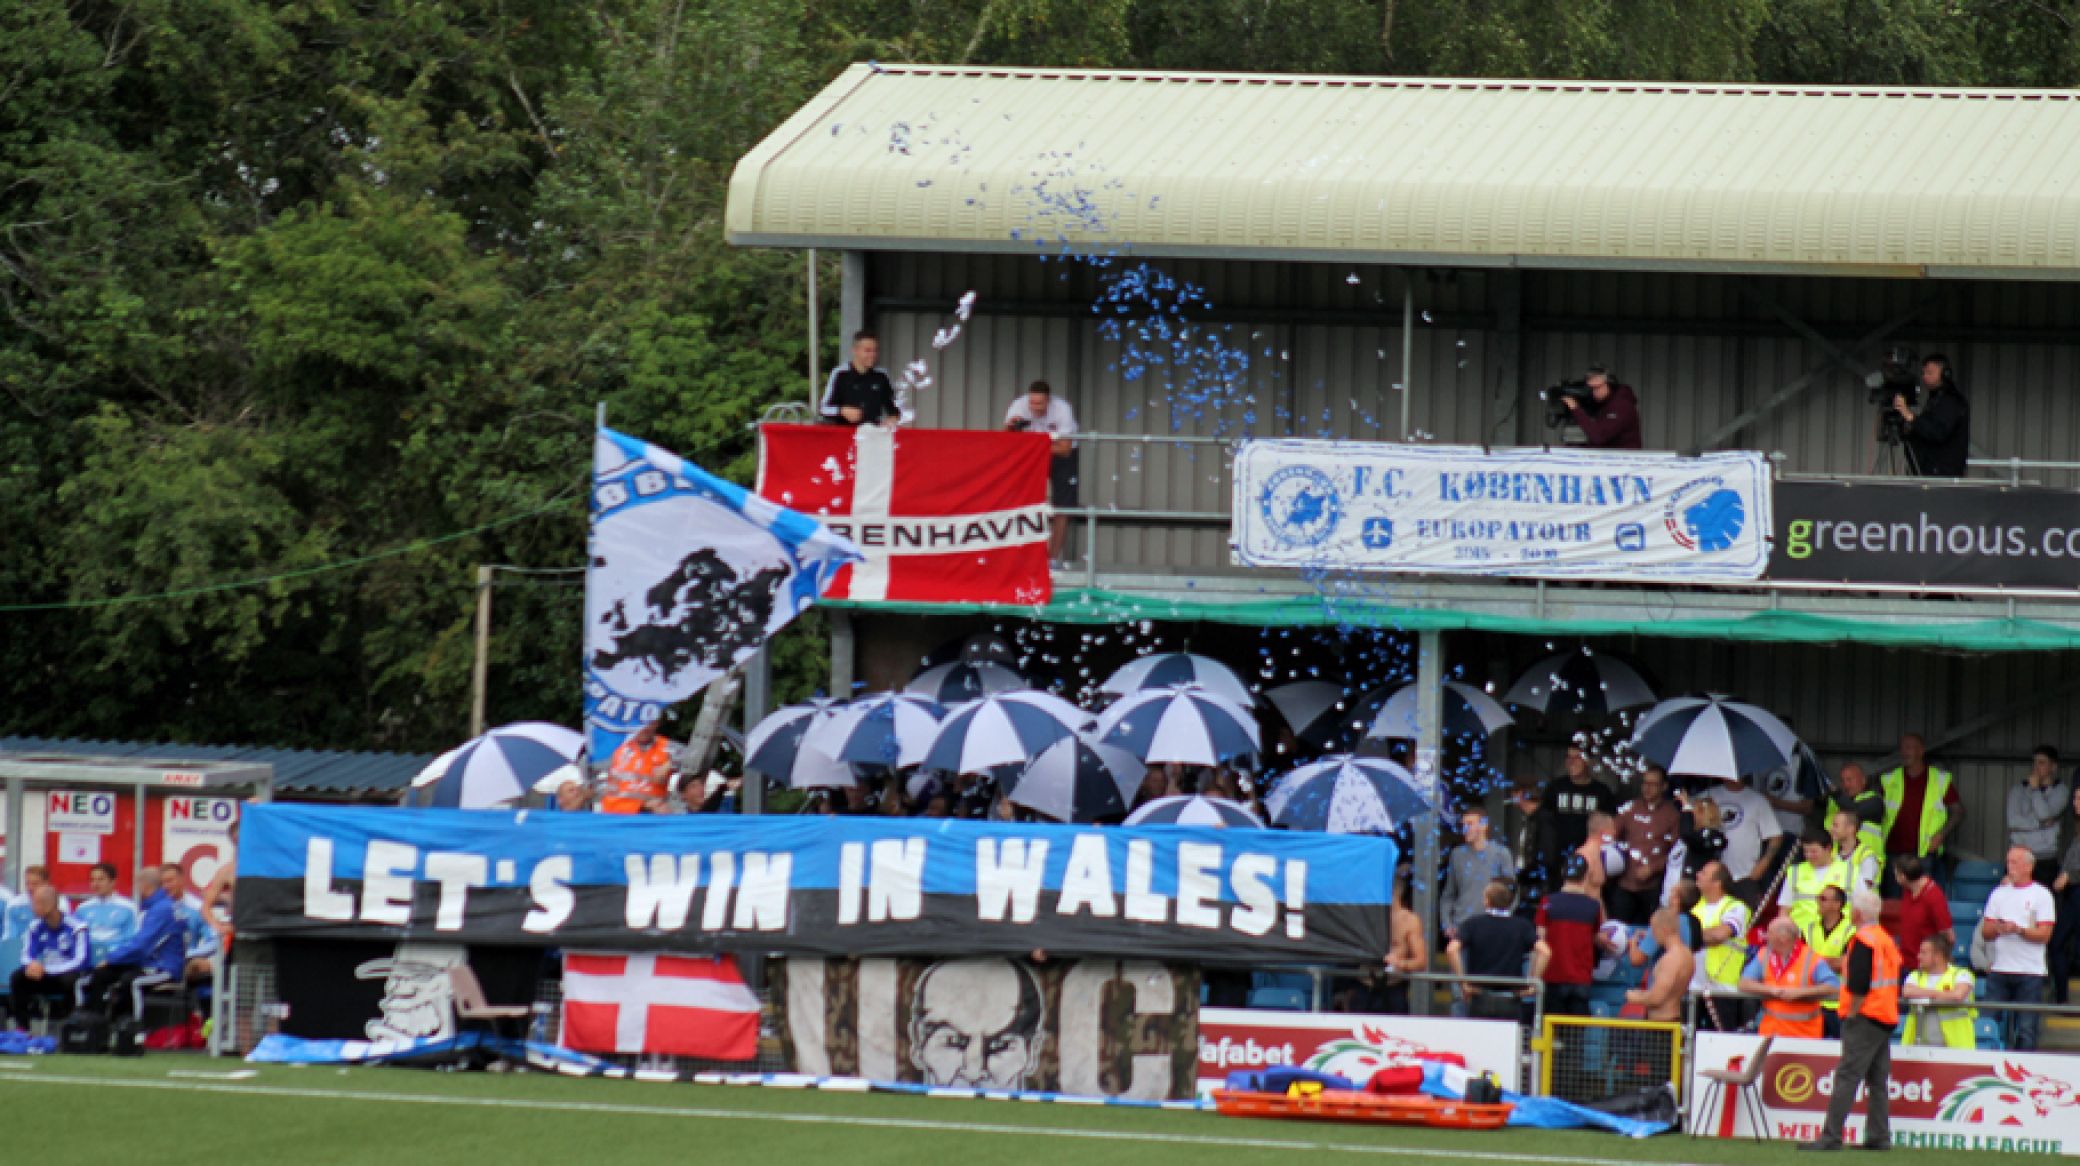 F.C. Copenhagen supporters in Wales